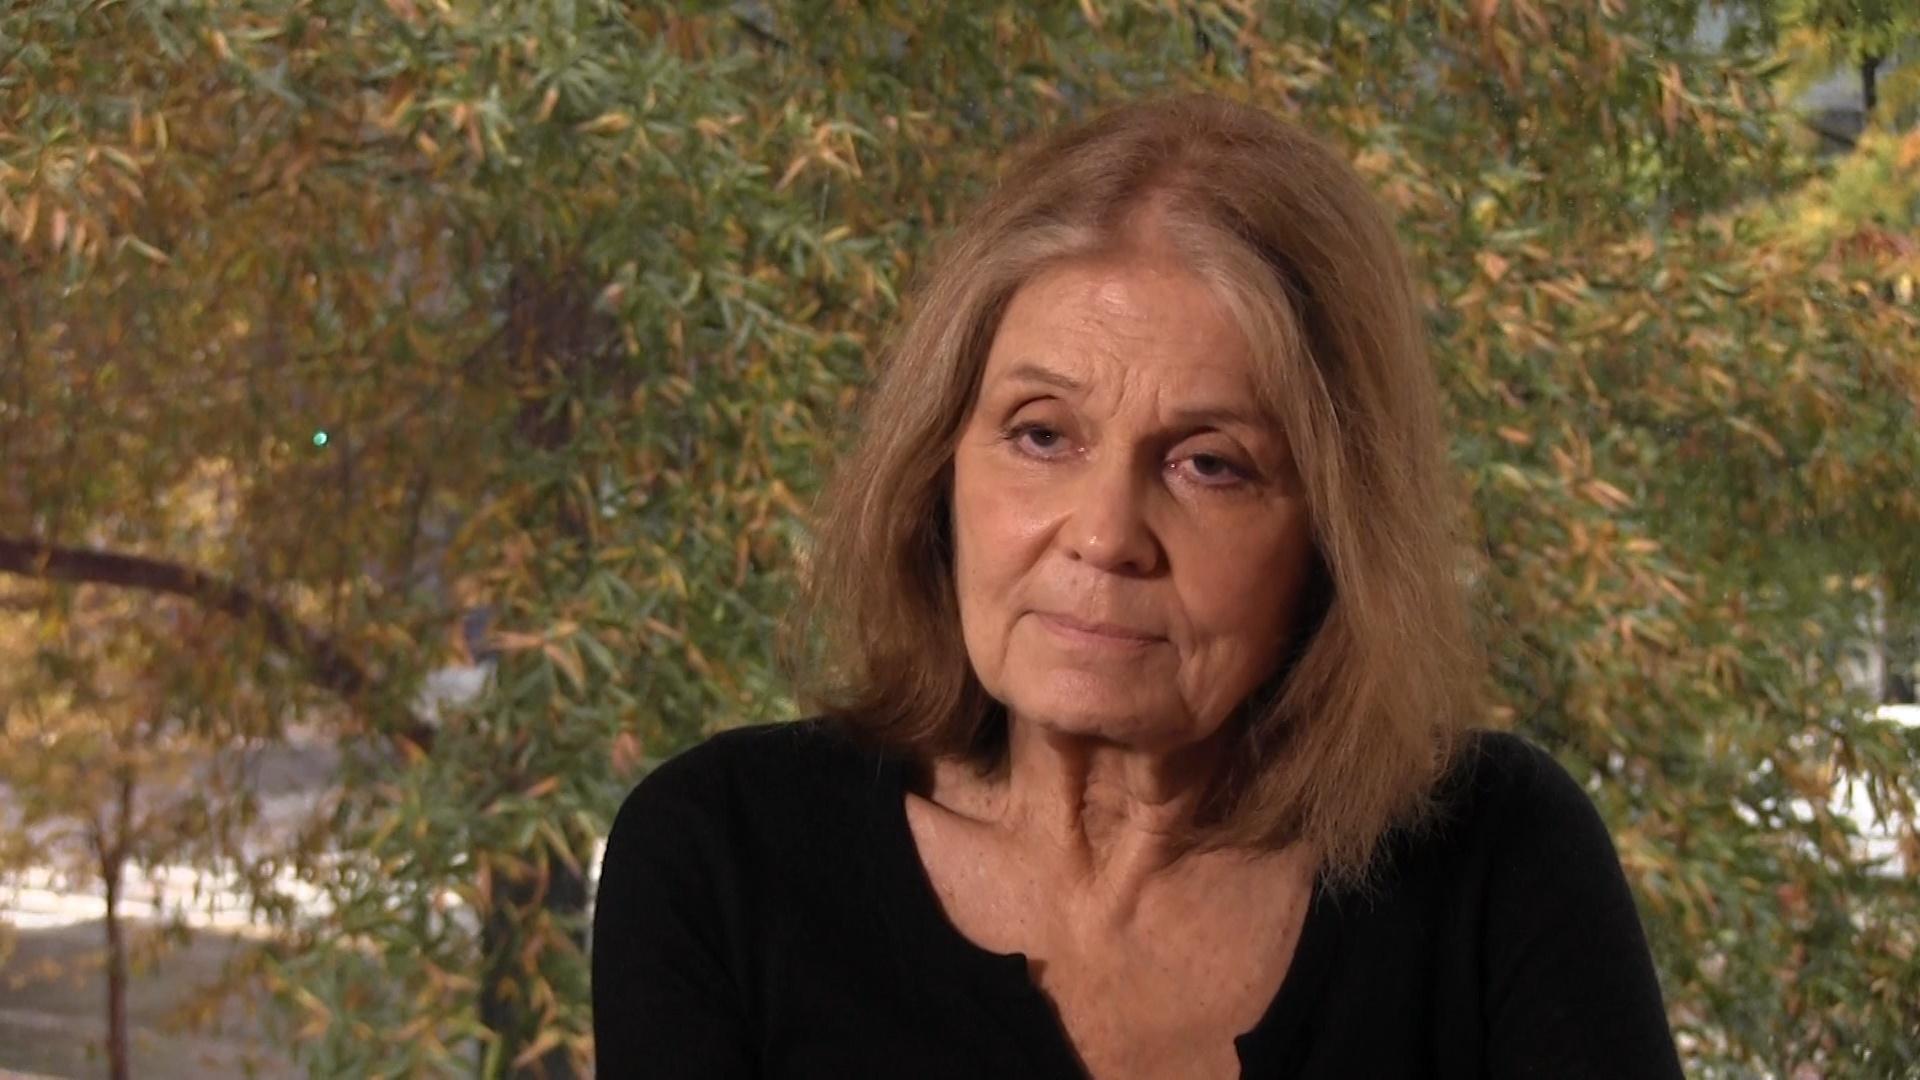 TTC Exclusive: Full Gloria Steinem Interview